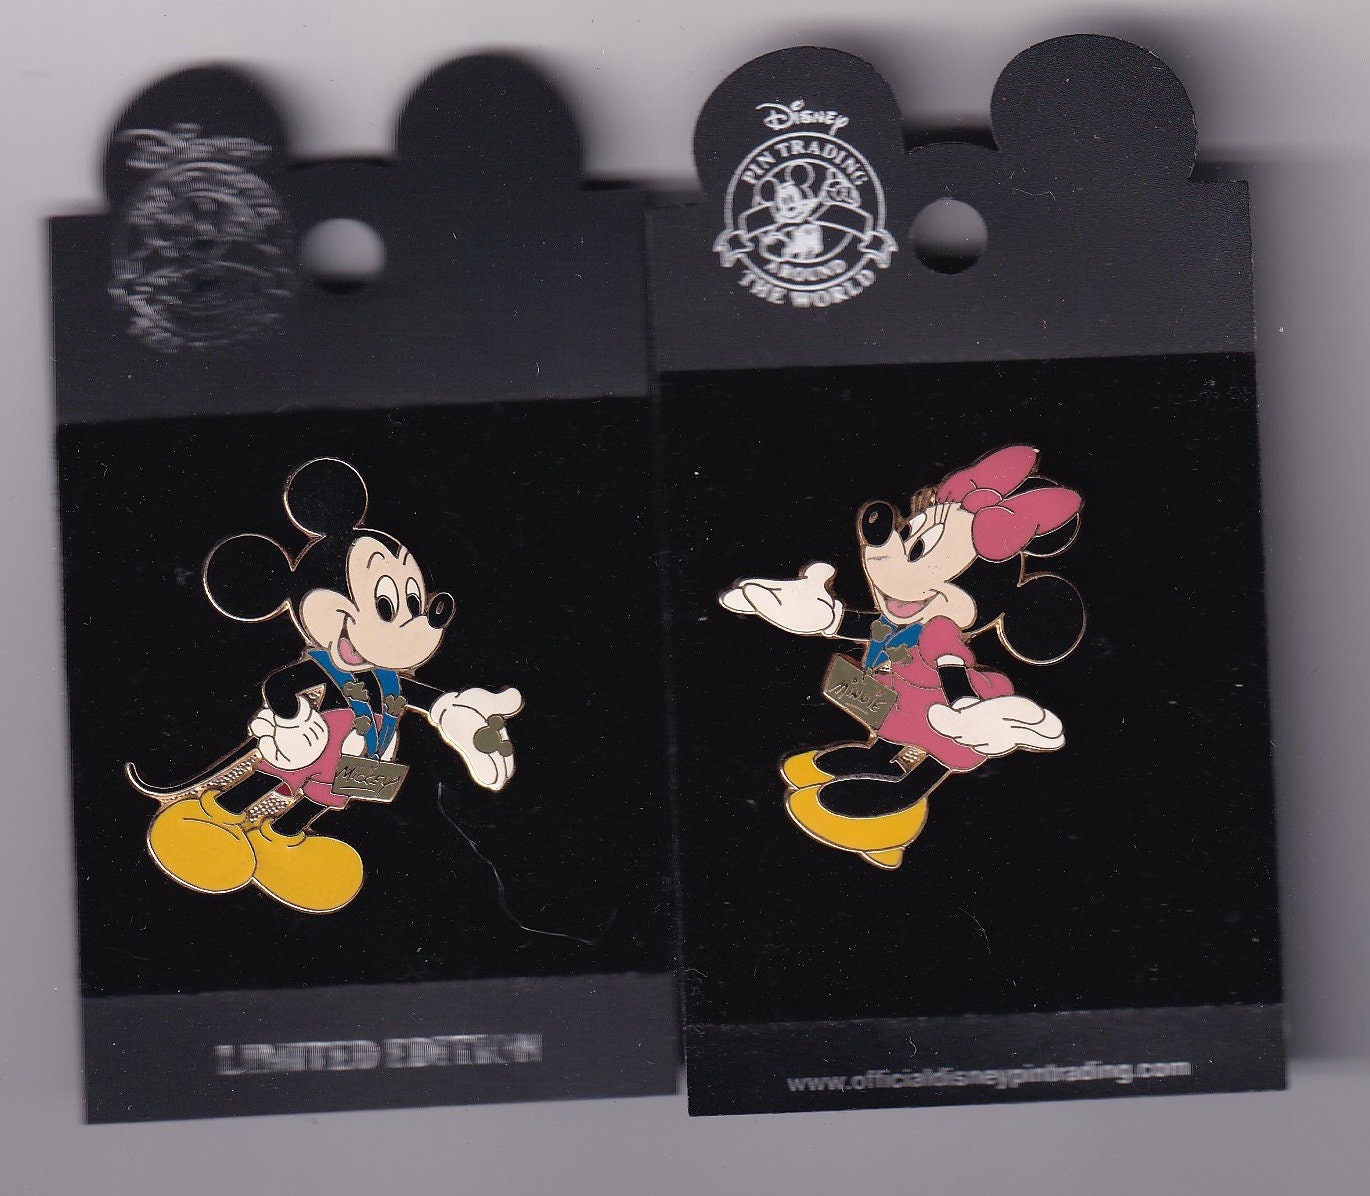 Disney World Pin Trading Official Lanyard W/ Mickey Minnie Pin Trading Pins  RARE